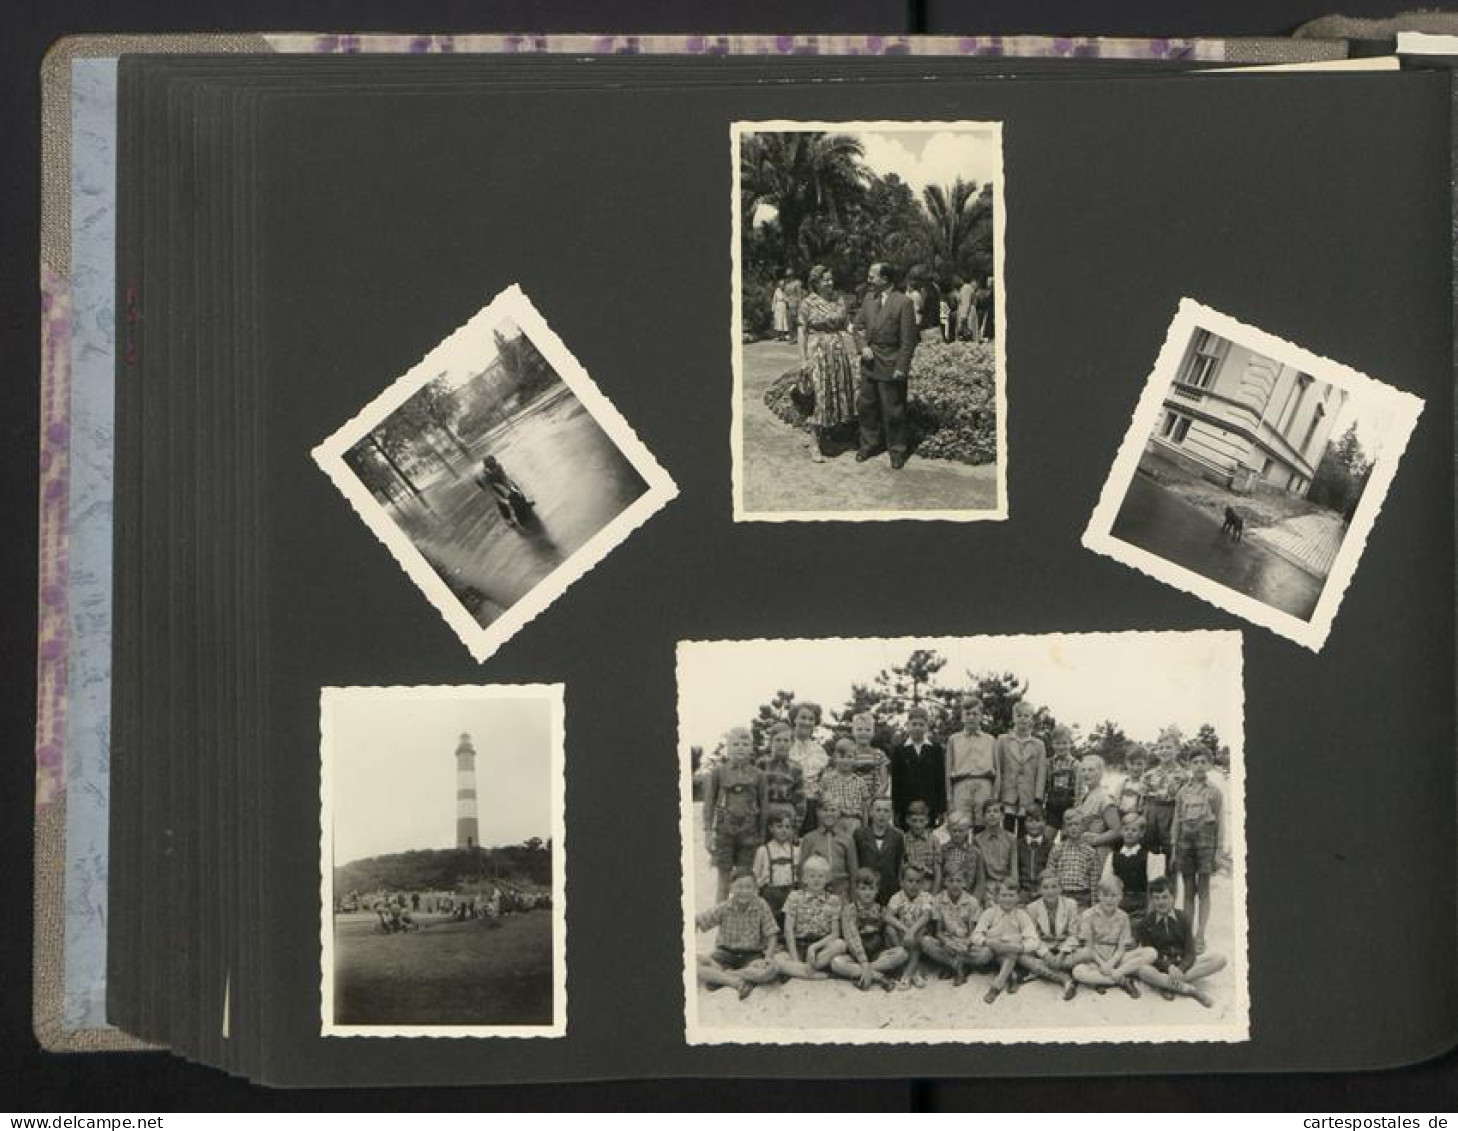 Fotoalbum mit 200 Fotografien, Mutterglück, Familie Bosse (1942-1958), Kinderfotos, Kinderwagen, Soldat in Uniform 